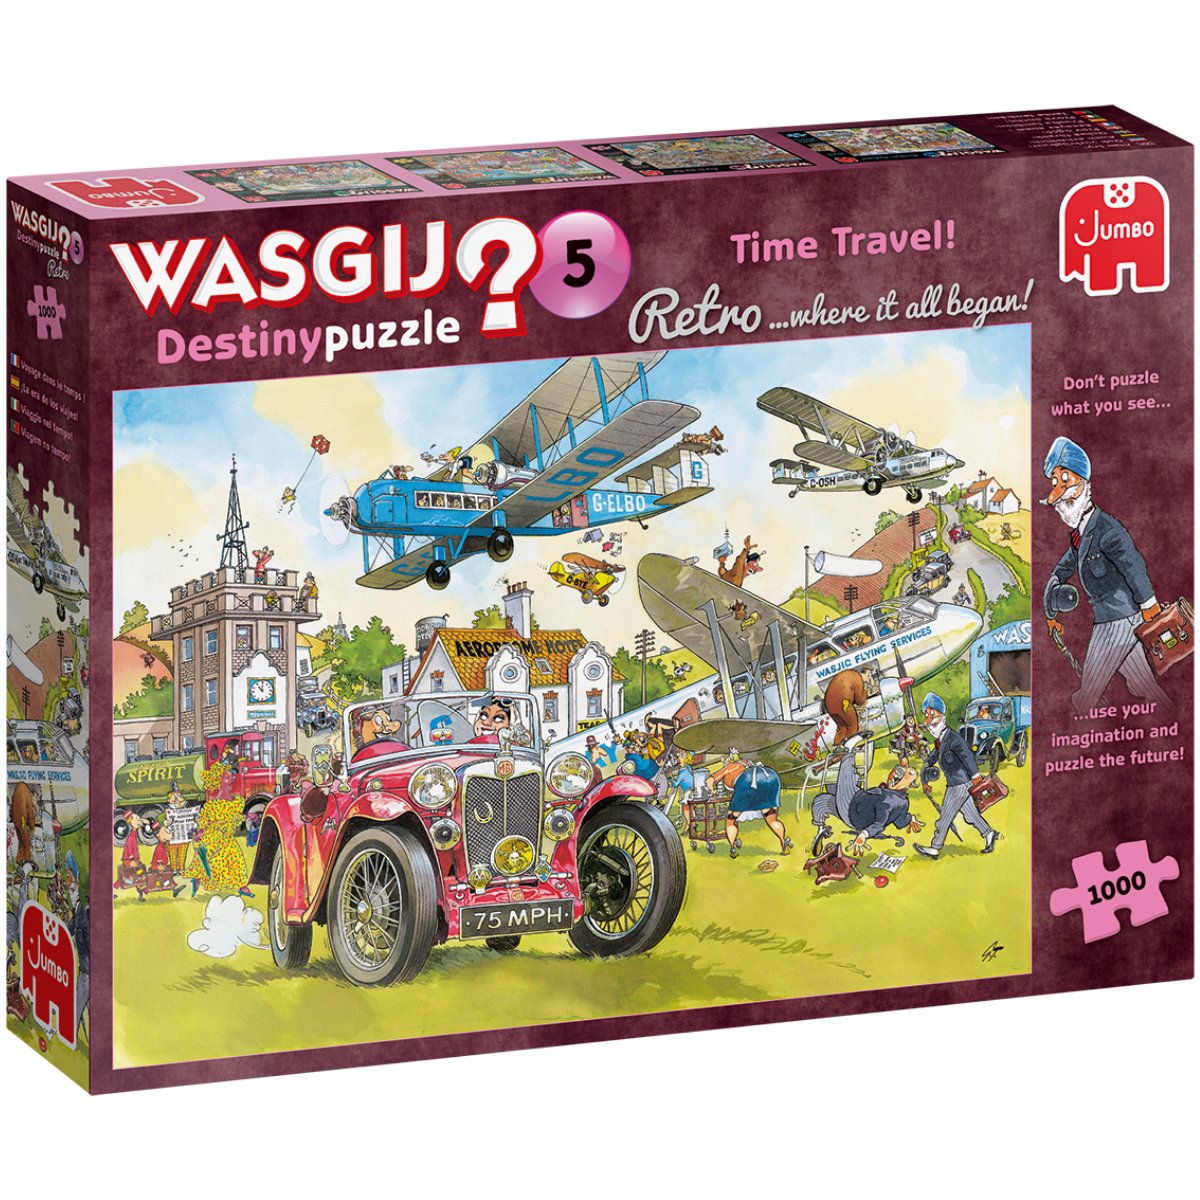 Wasgij Destiny 5 Time Travel! Jigsaw Puzzle (1000 Pieces) - Phillips Hobbies